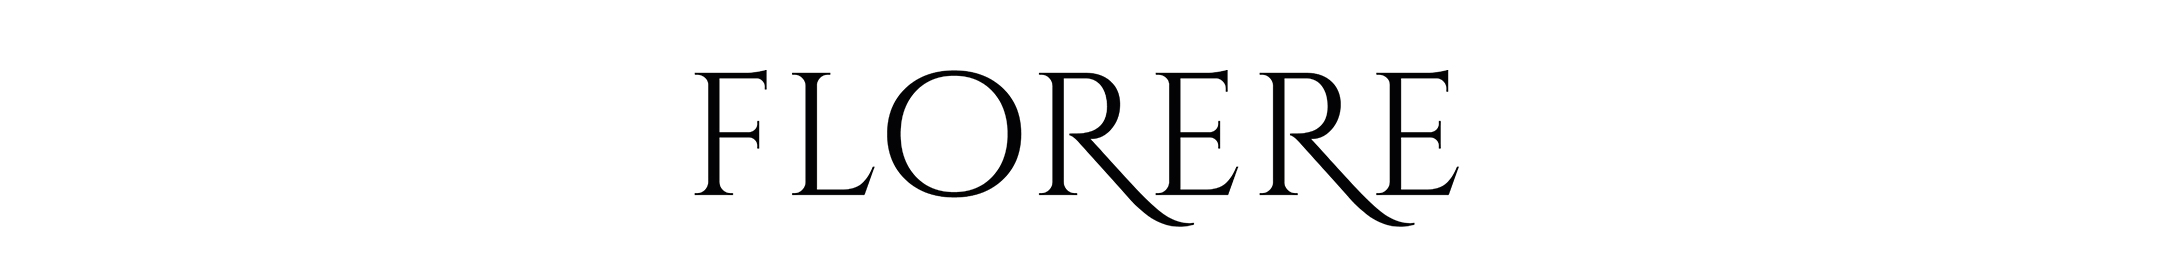 Florere_Desktop_Logo